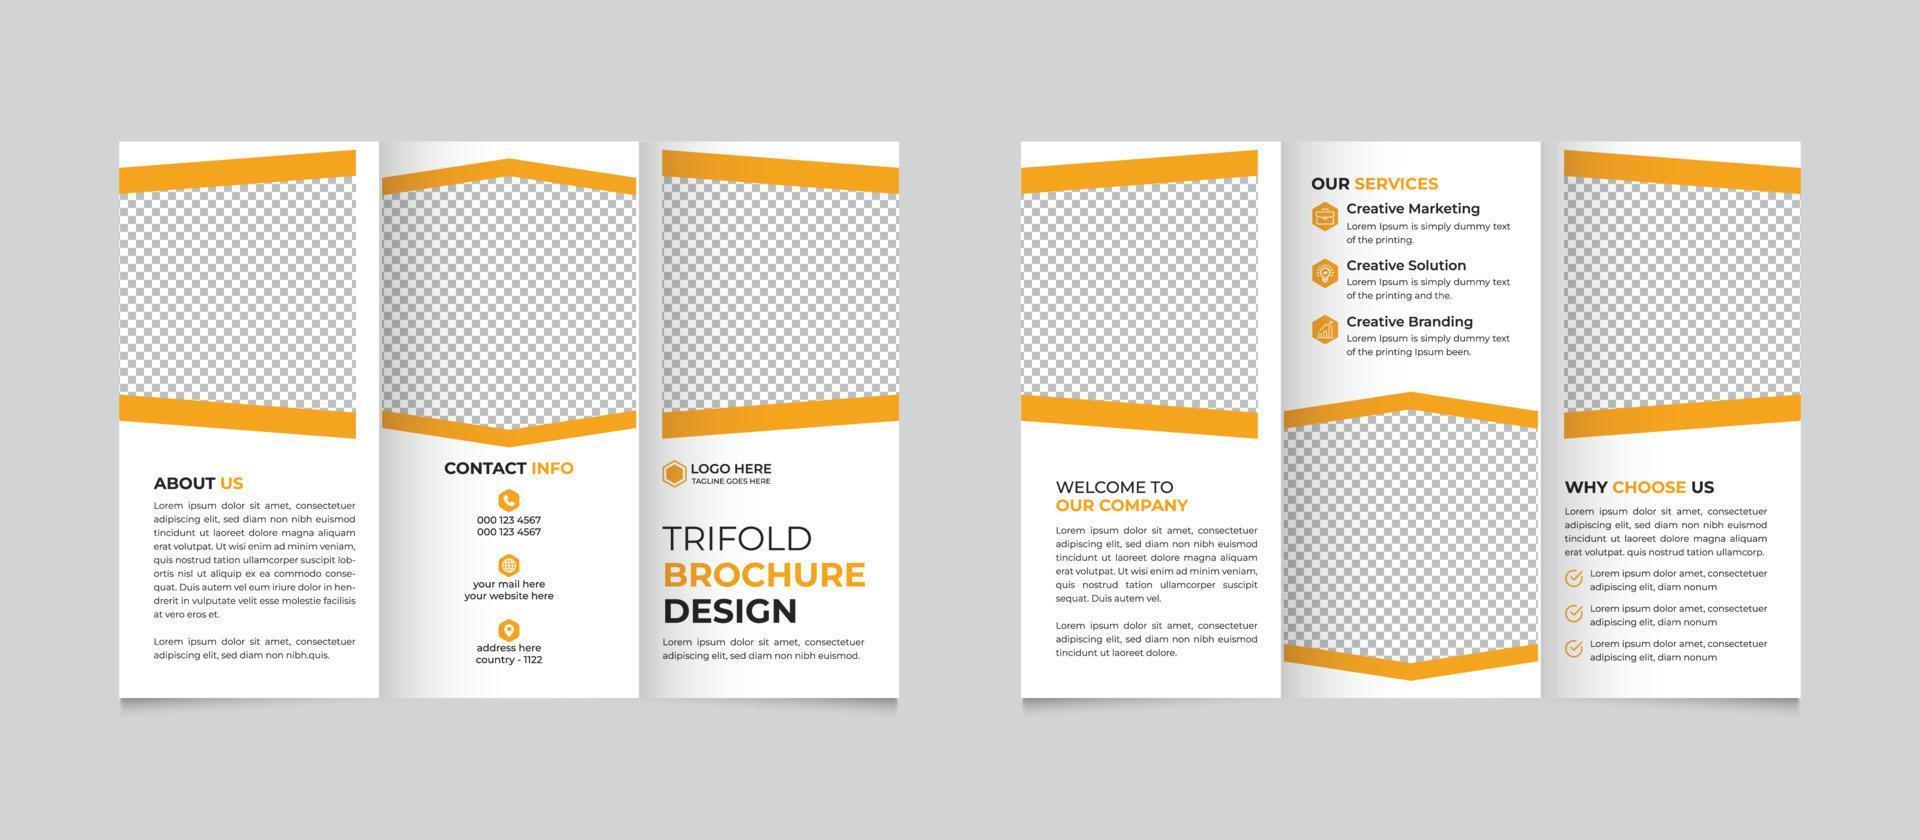 creativo tríptico folleto diseño, negocio folleto plantilla, corporativo folleto diseño gratis vector